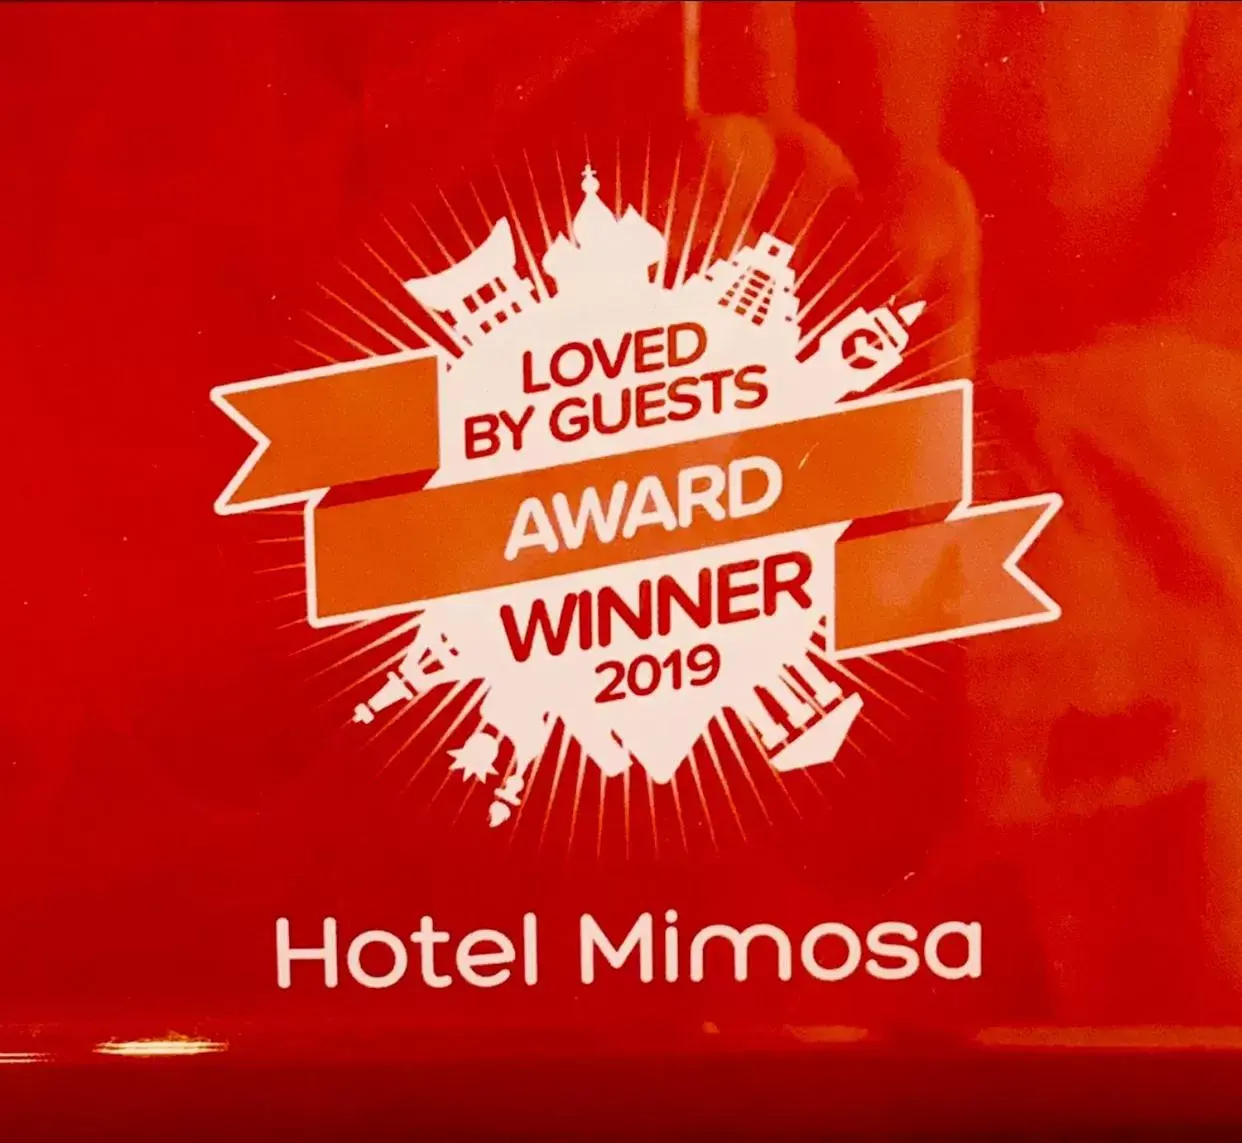 Certificate/Award in Hotel Mimosa